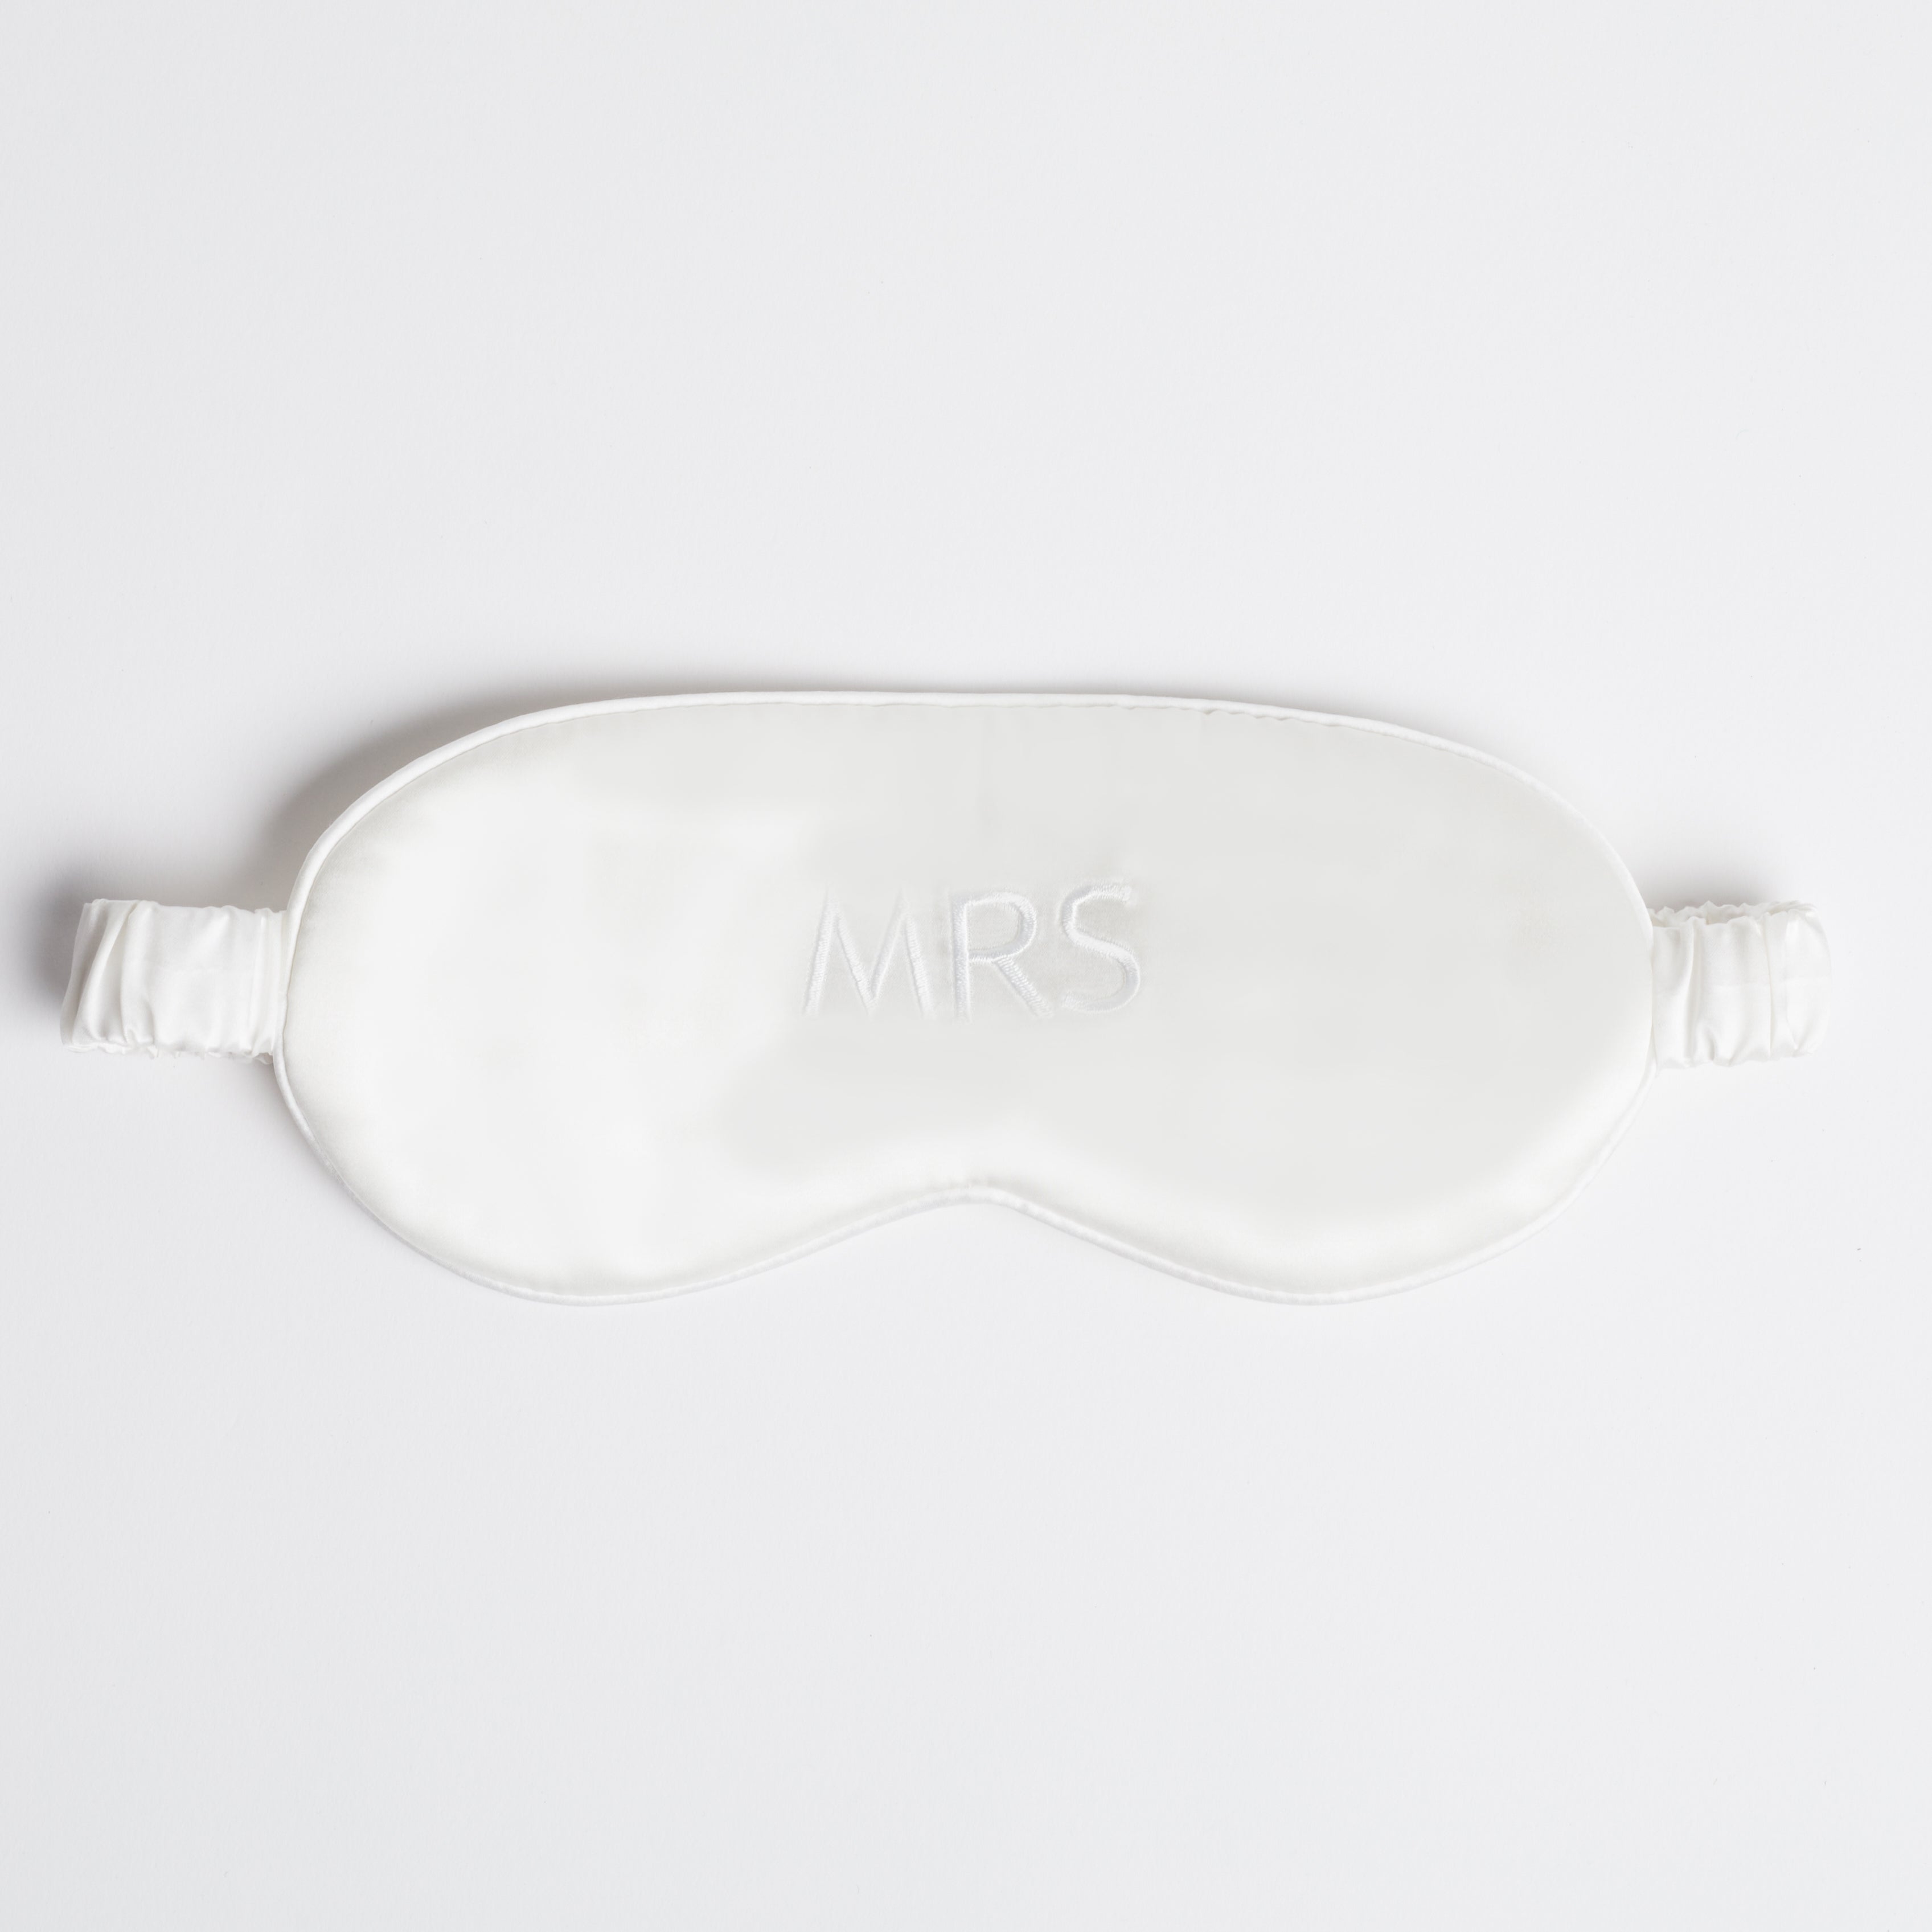 White silk eye mask with "MRS" written across it, lying on a white background.